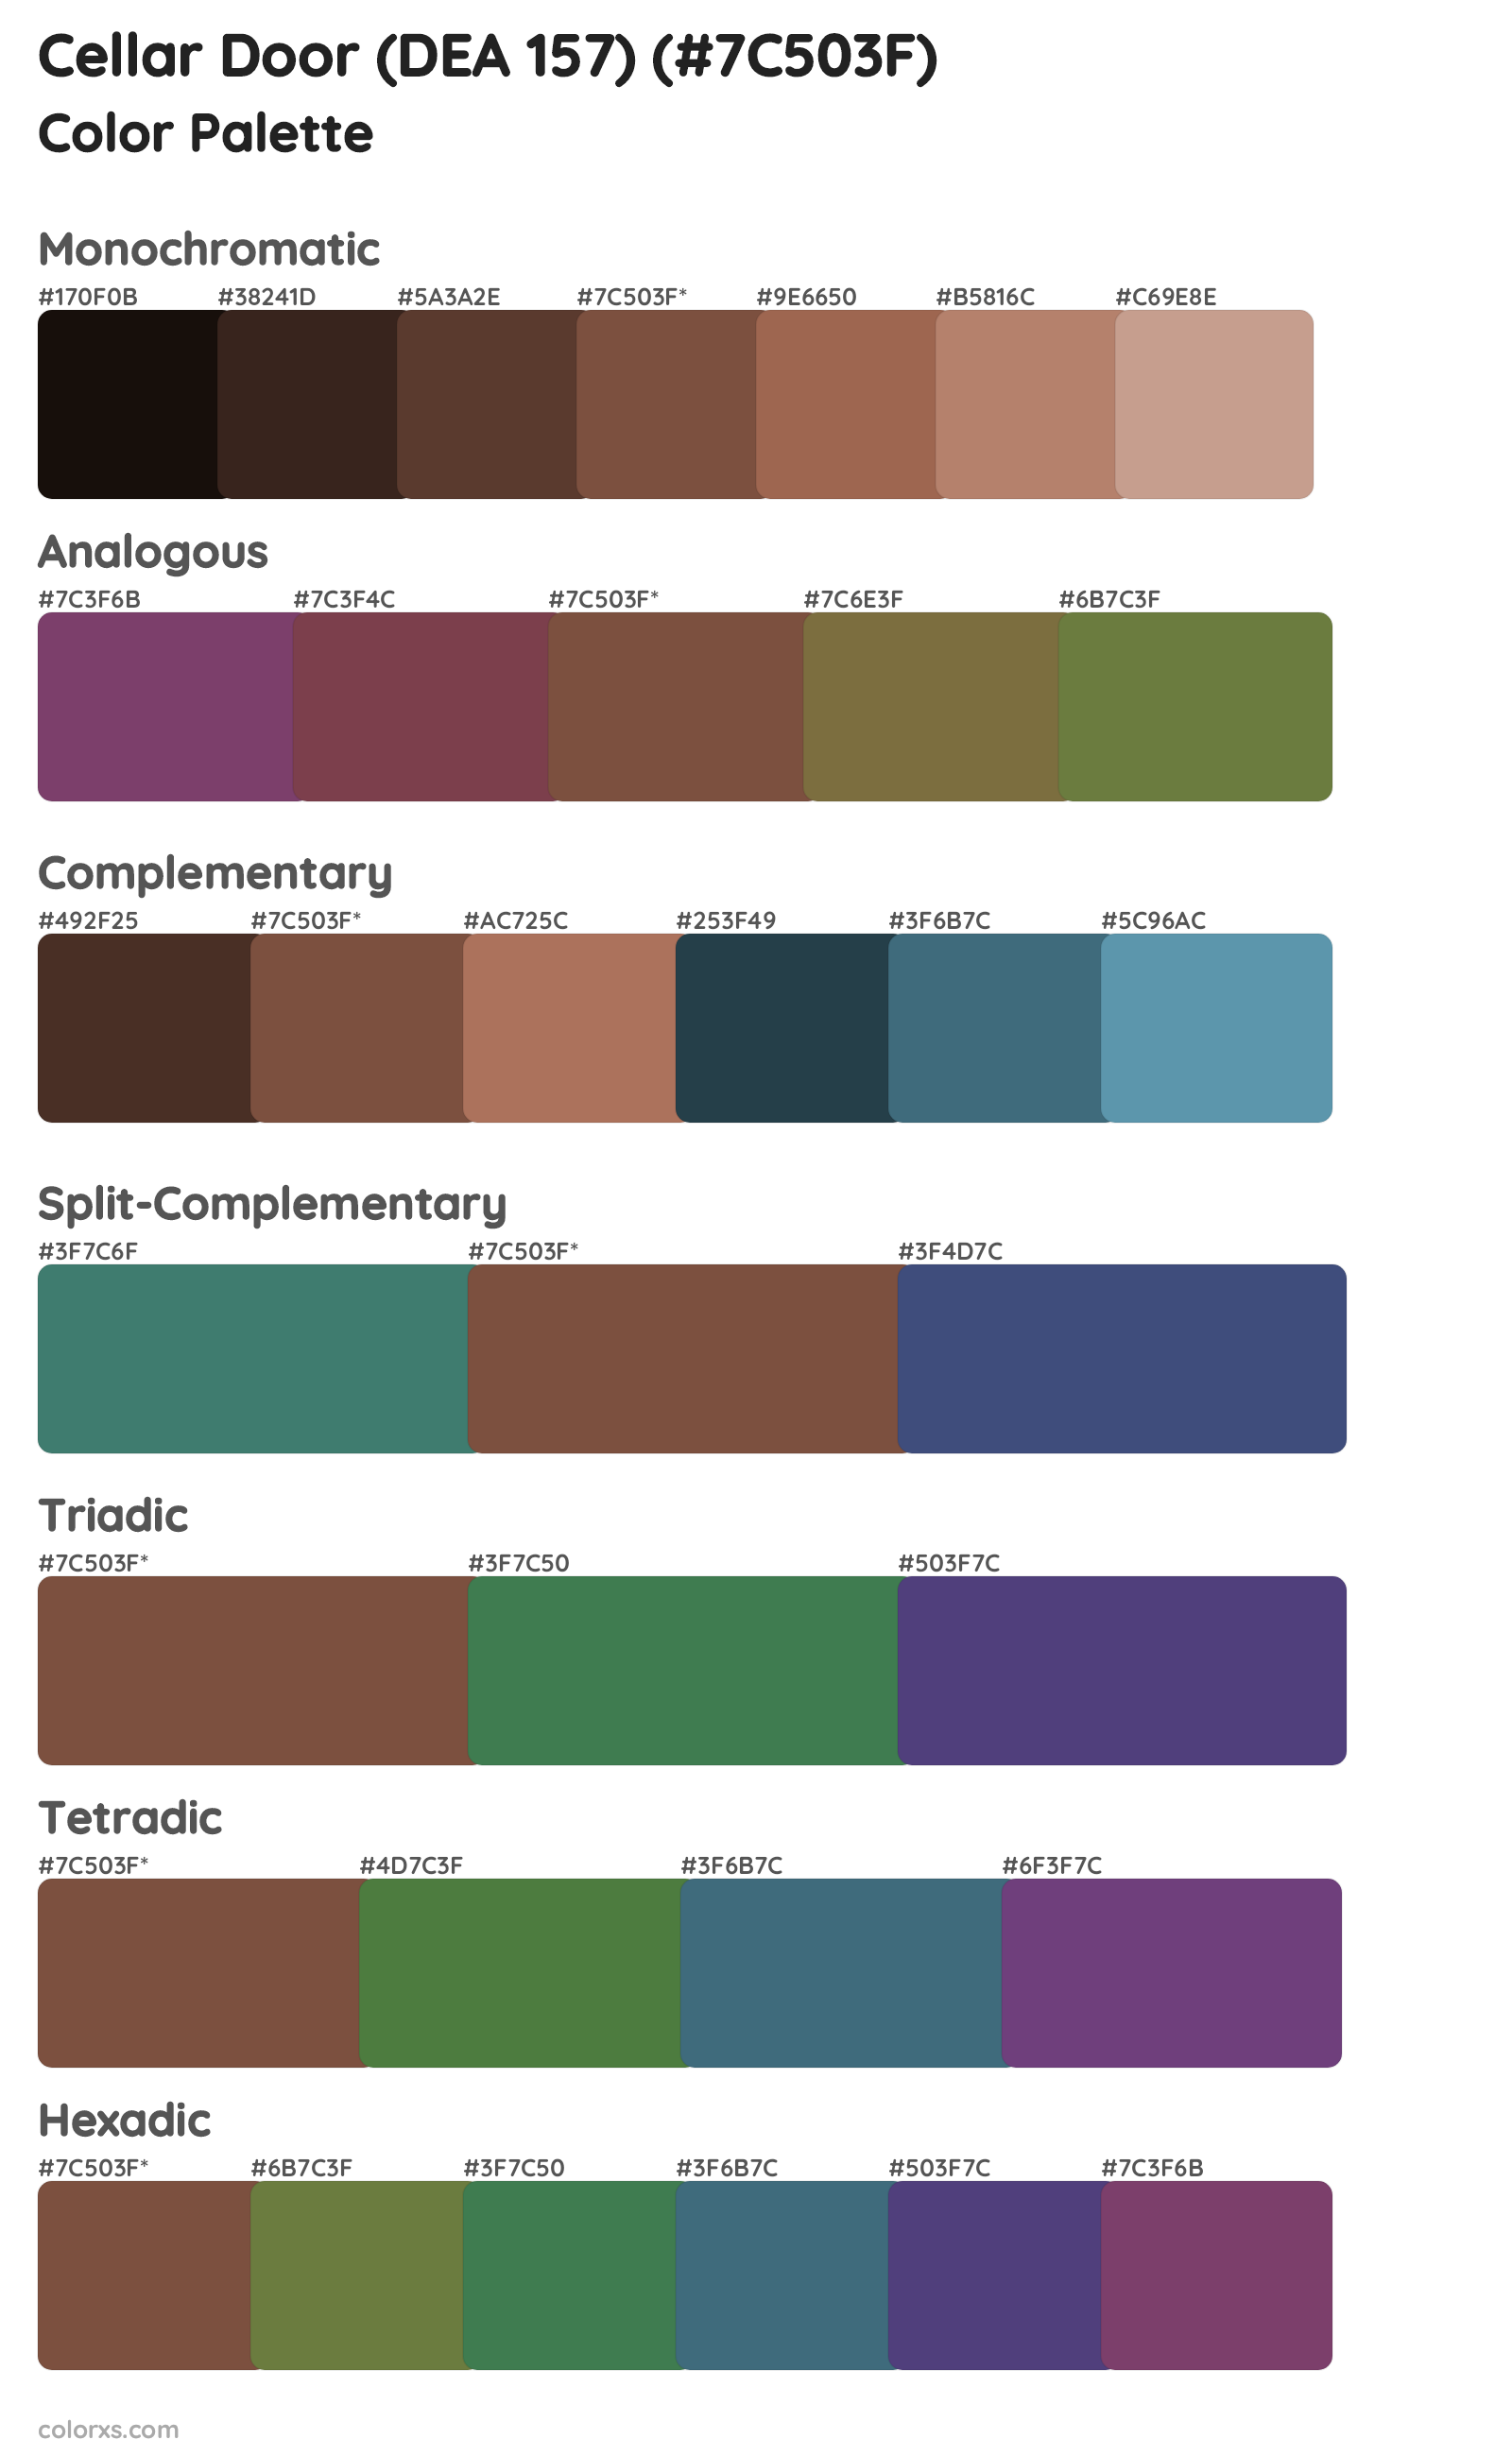 Cellar Door (DEA 157) Color Scheme Palettes